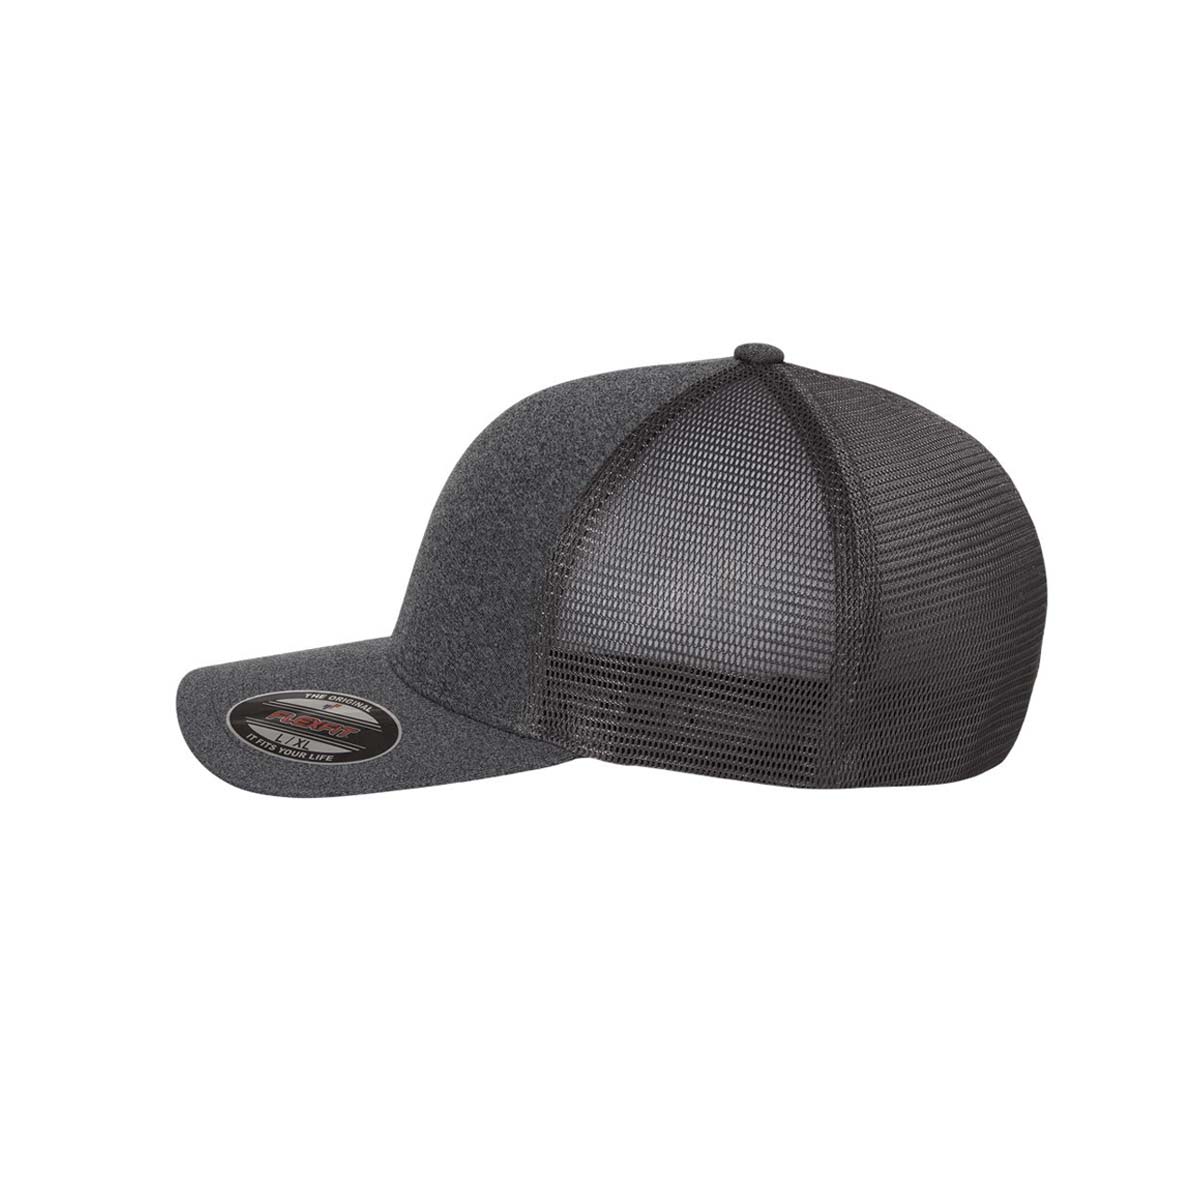 Flex Team - Comfort Inc. Muscle Flexfit Hats